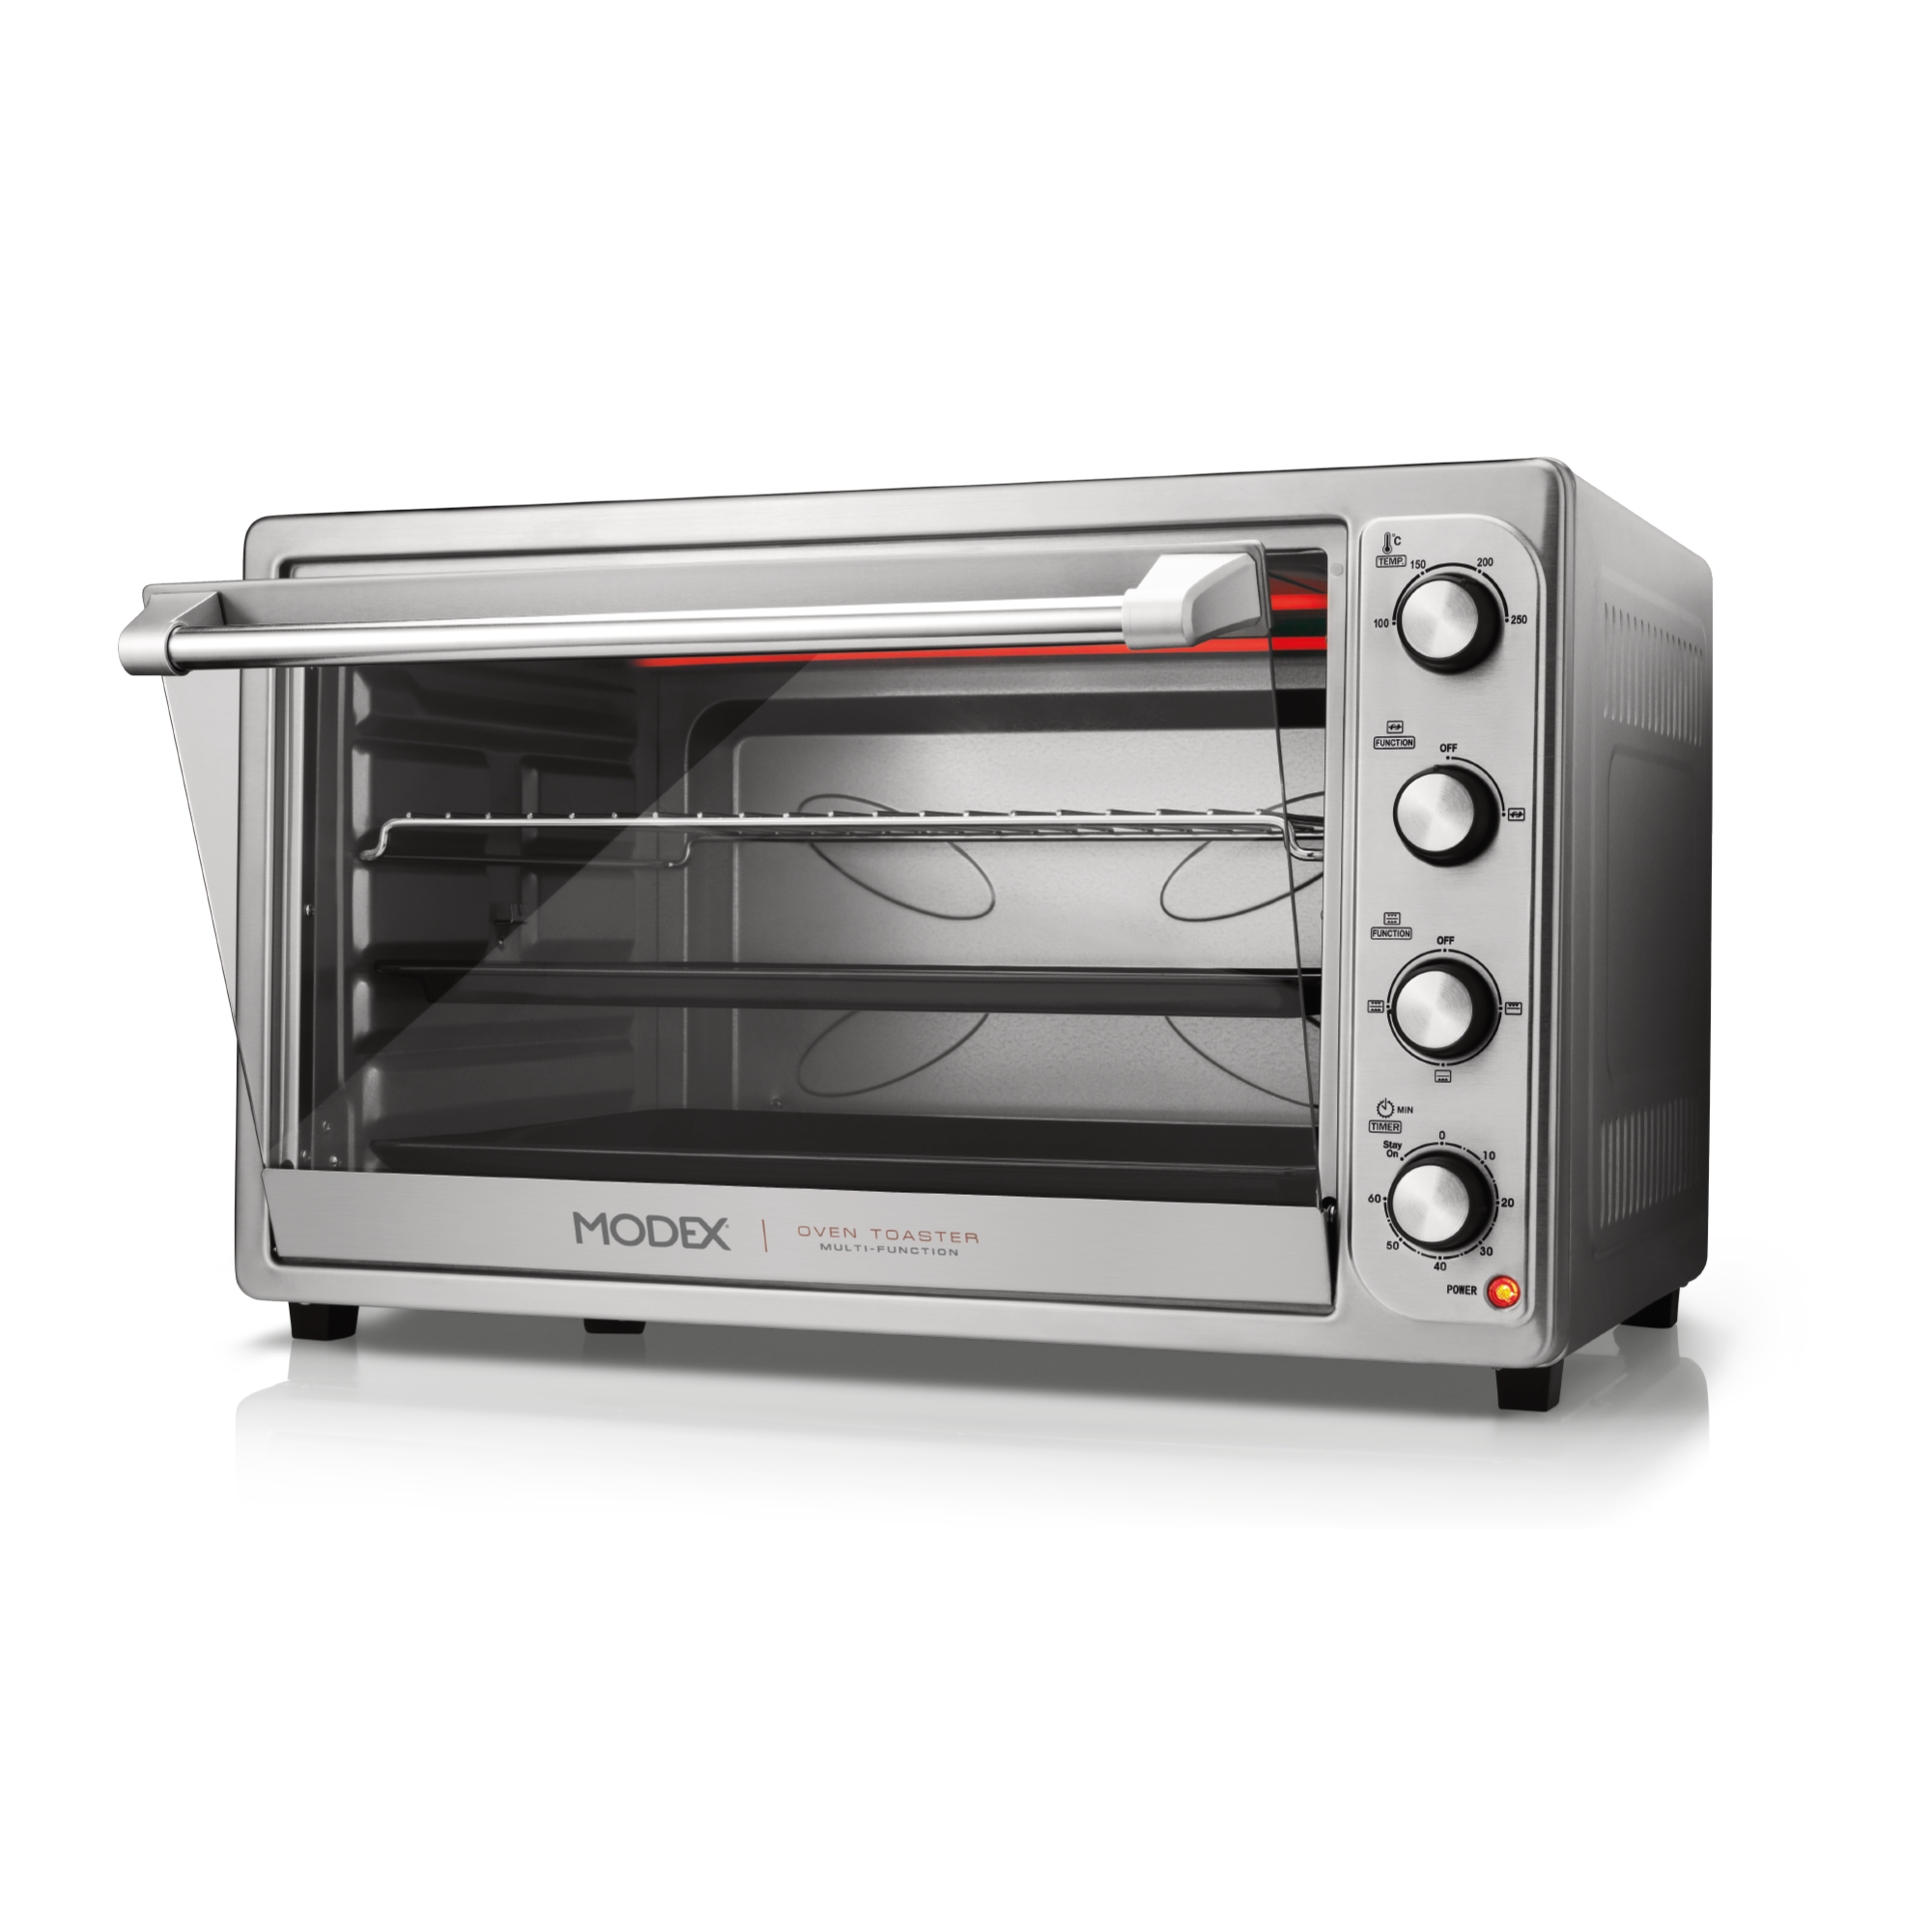 Ov9850 Oven Toaster